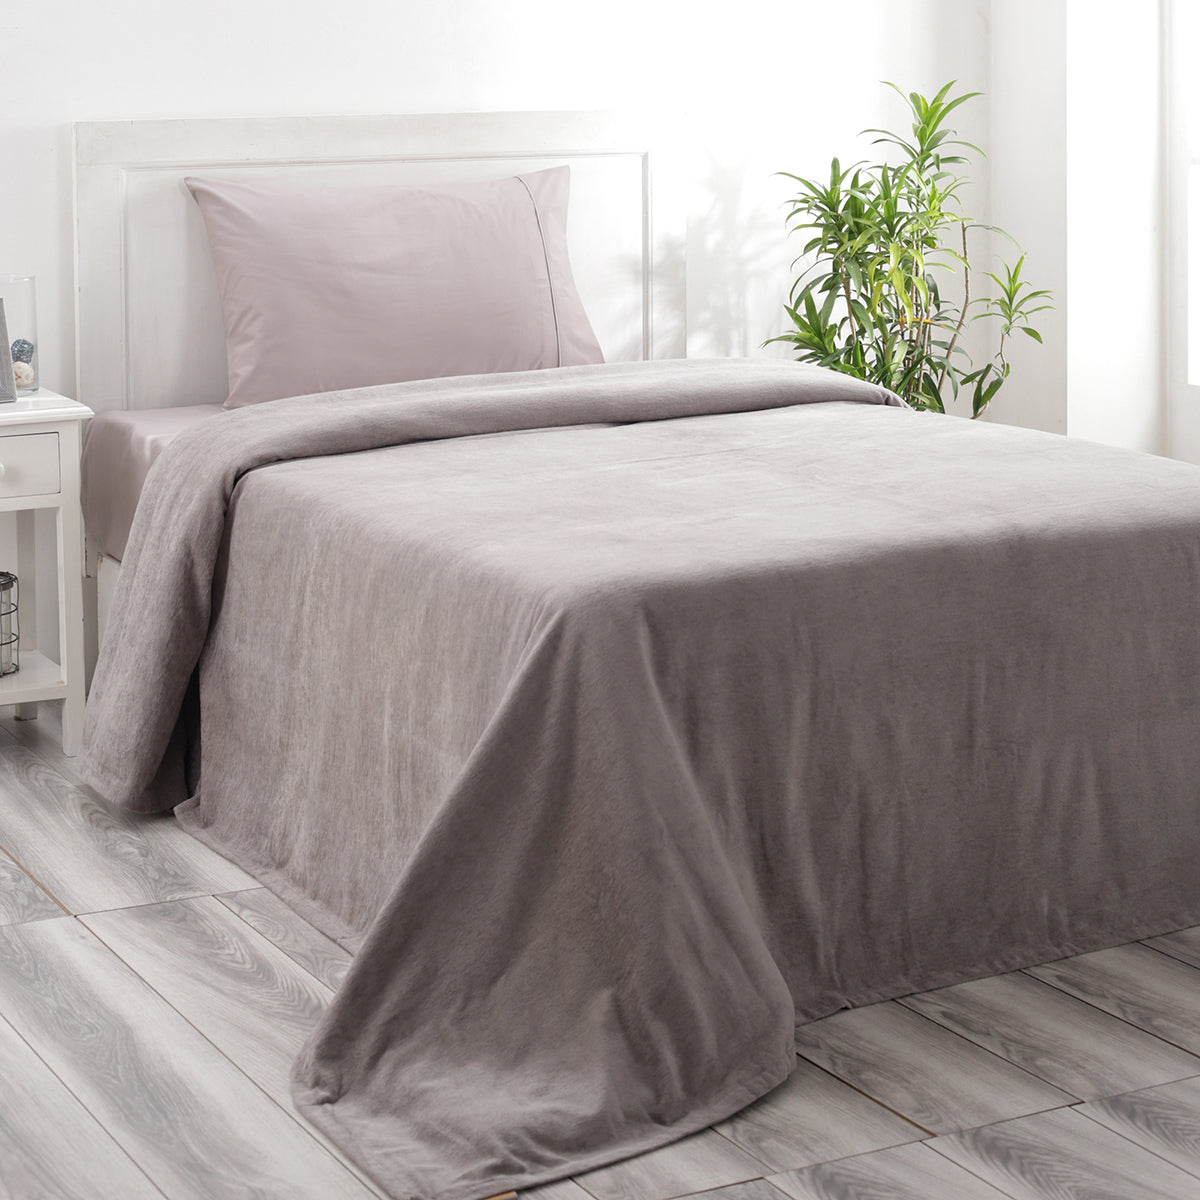 Jessica 100% Cotton Solid Woven Super Soft Wild Dove Bed Cover/Blanket